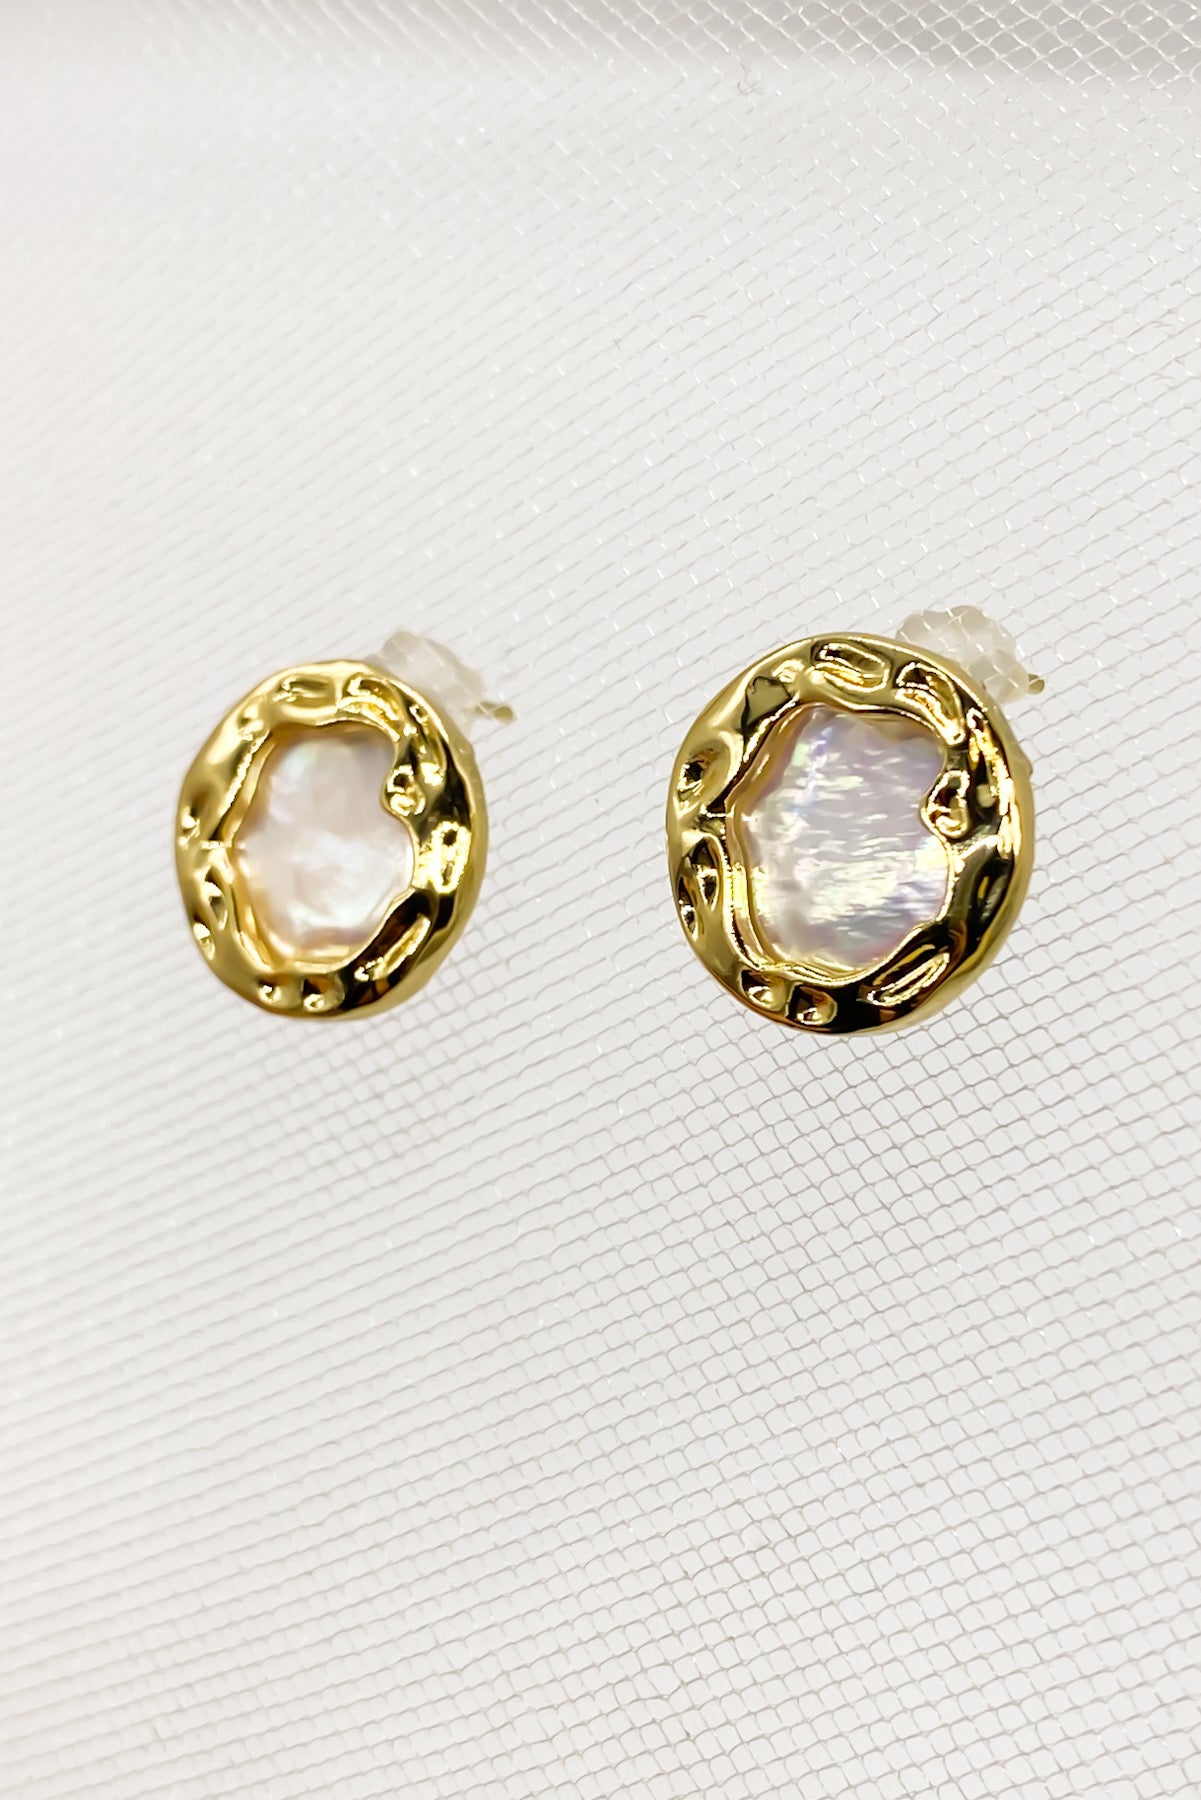 SKYE San Francisco Shop Chic Modern Elegant Classy Women Jewelry French Parisian Minimalist Cecile Freshwater Pearl Earrings